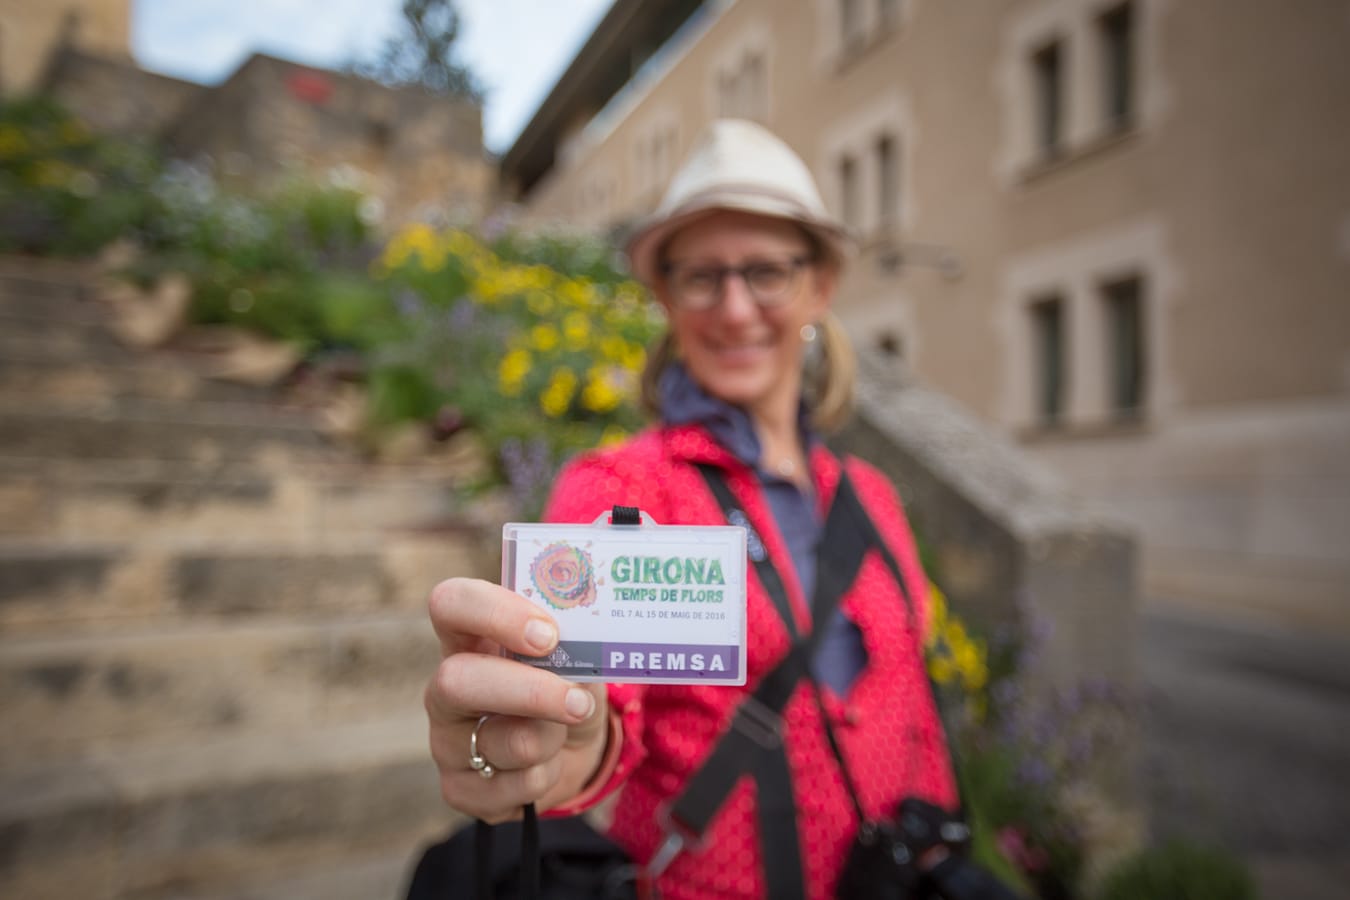 Girona Flower Festival press pass